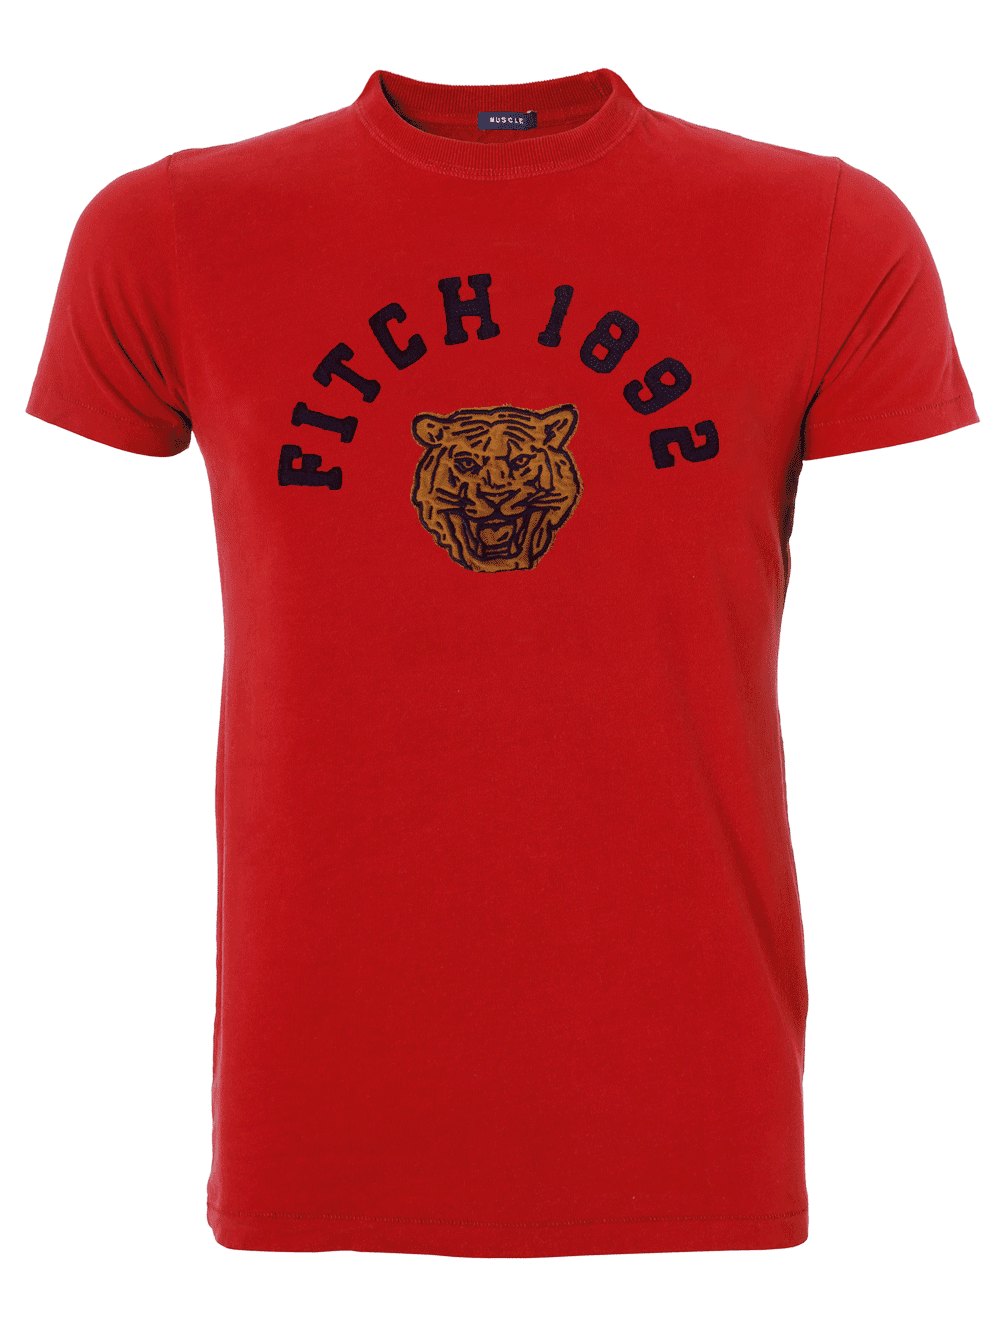 Camiseta Abercrombie Masculina Fitch 1892 Tiger Patch Vermelha